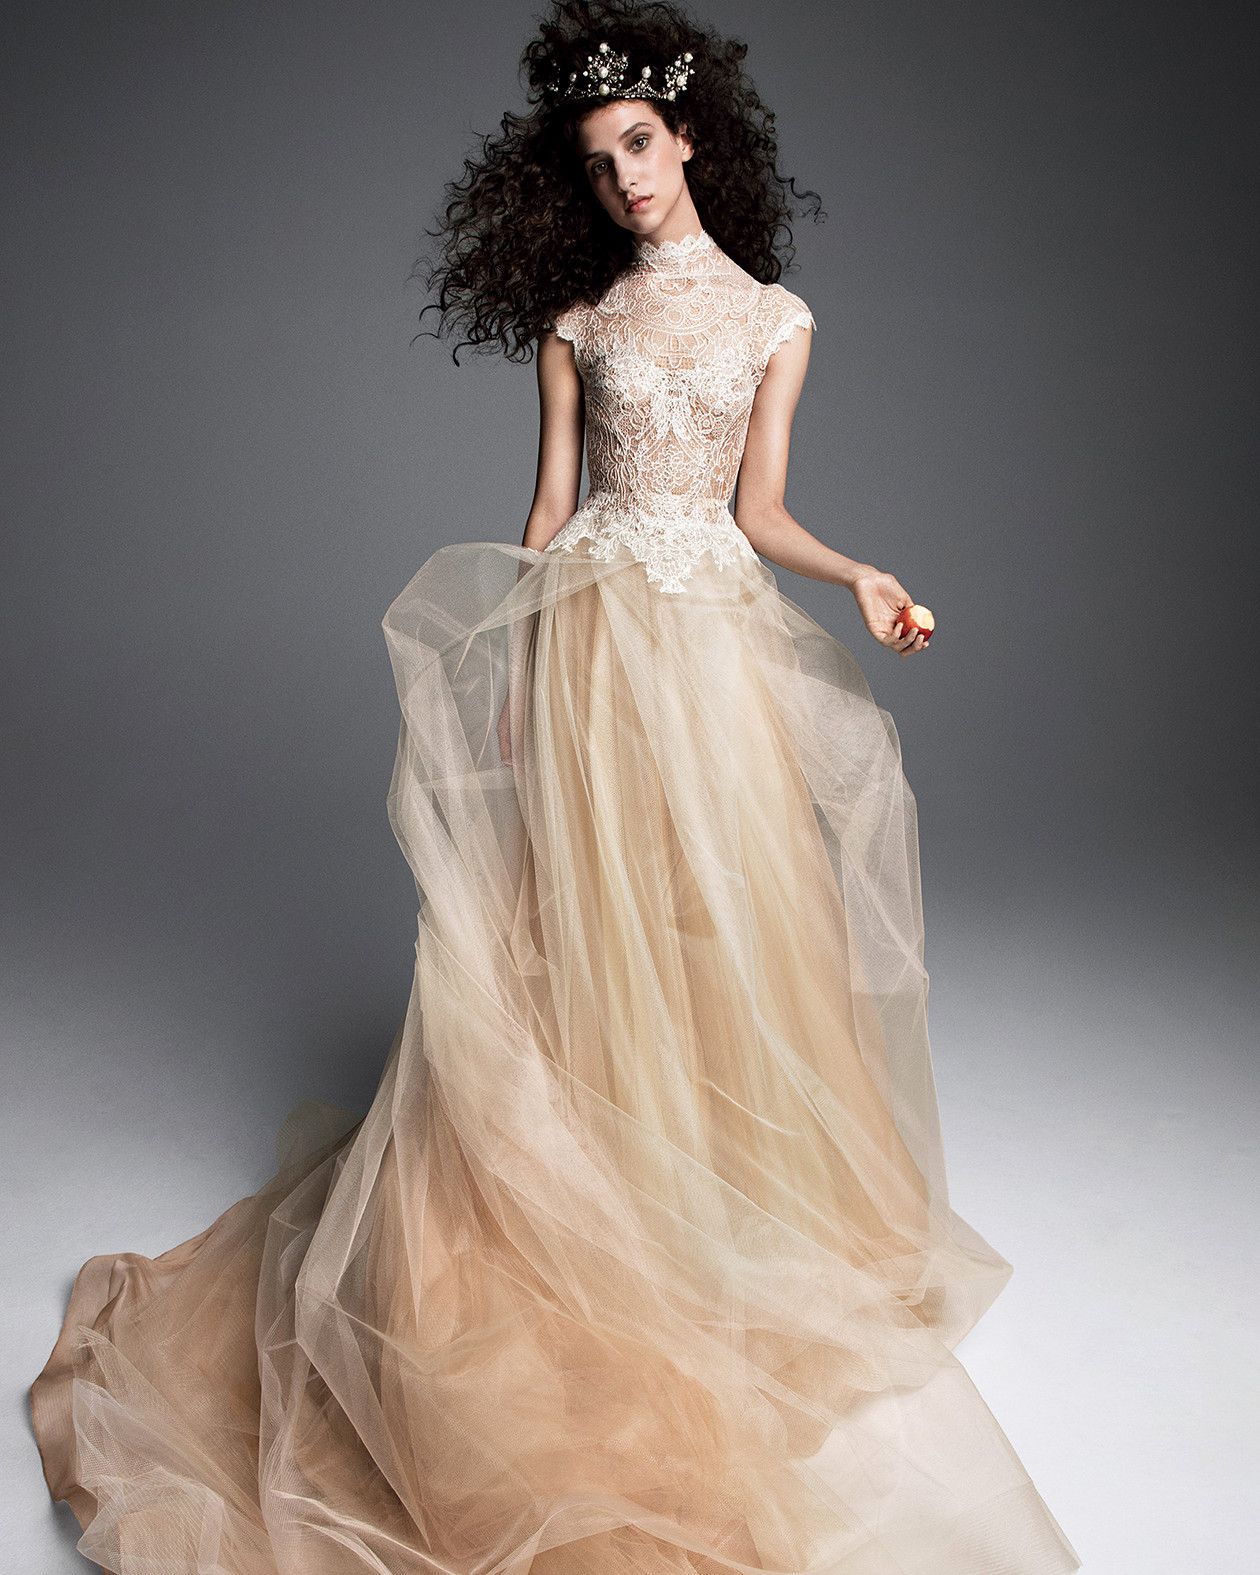 Vera Wang Fall 2019 Wedding Dress Collection